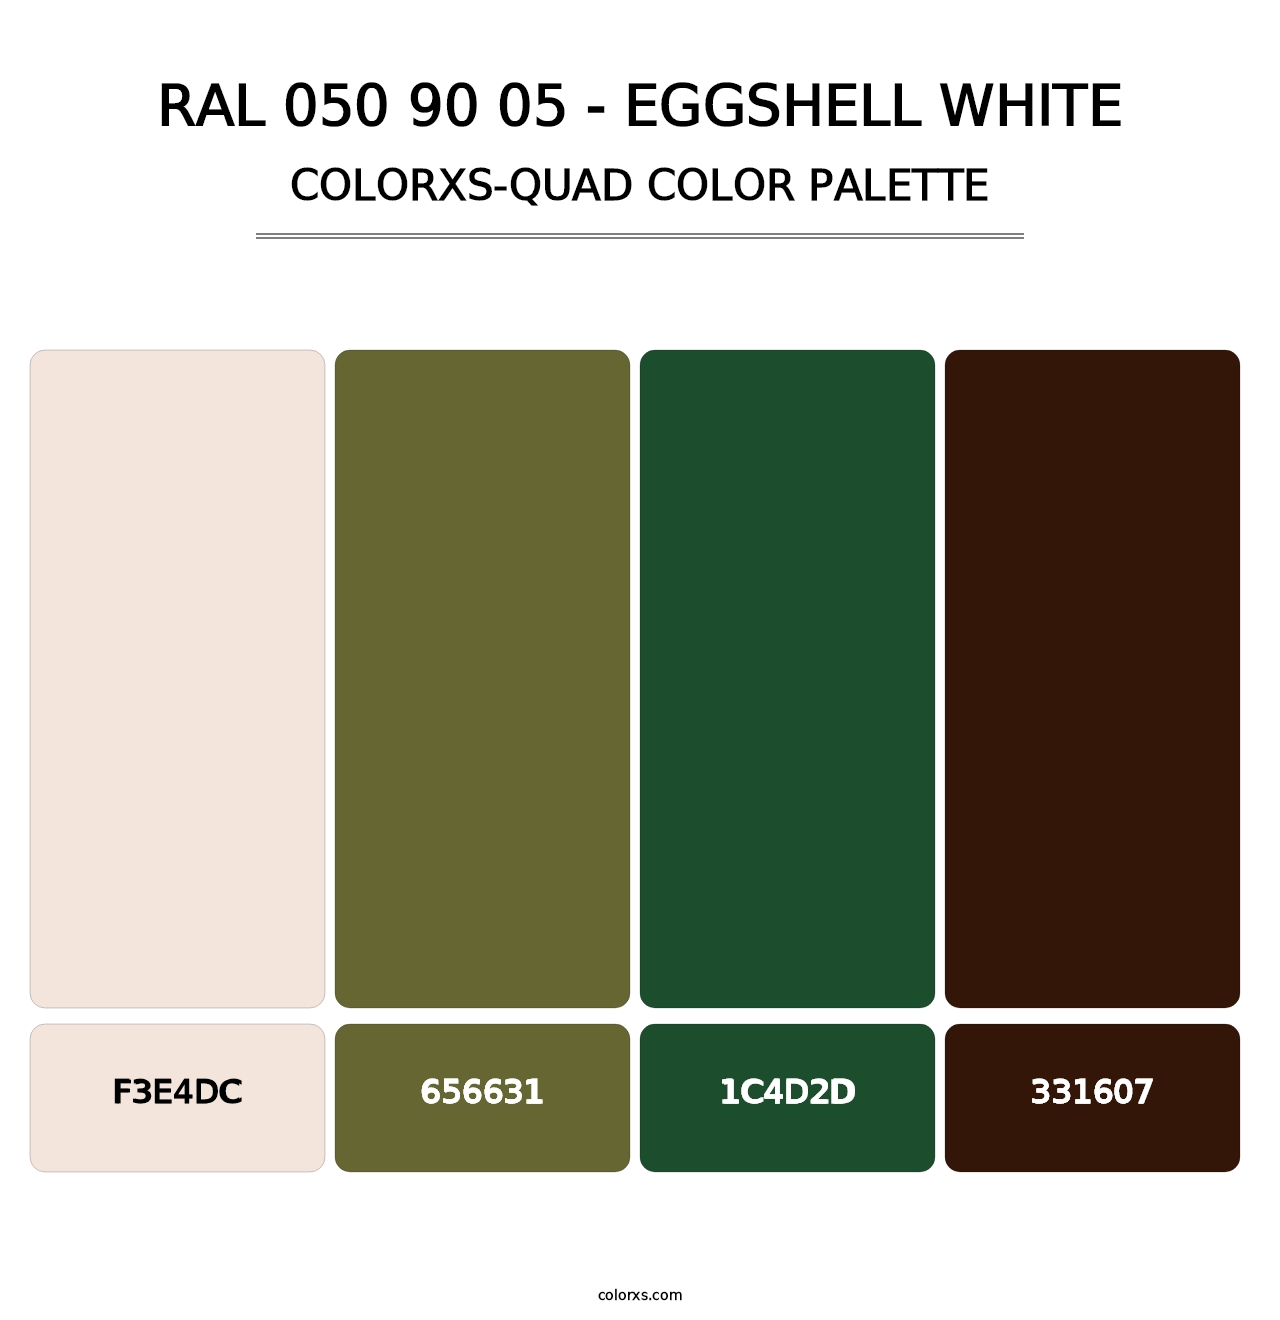 RAL 050 90 05 - Eggshell White - Colorxs Quad Palette